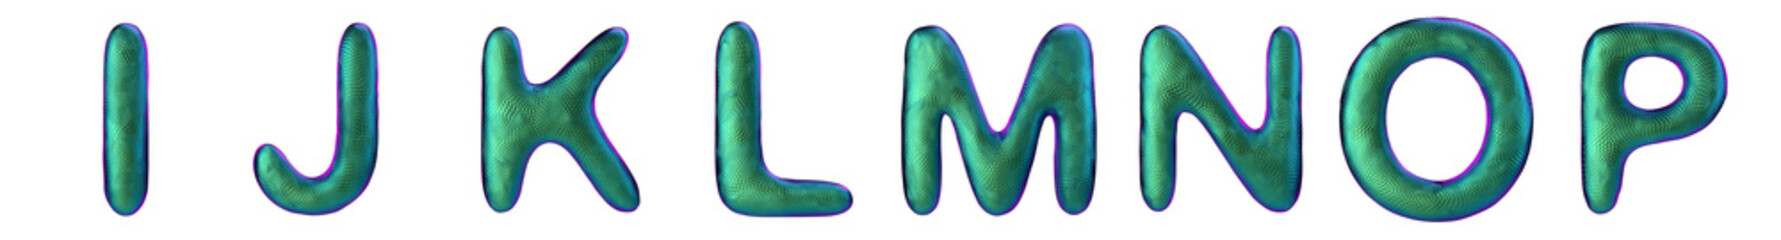 Letters set I, J, K, L, M, N, O, P made of realistic 3d render natural green snake skin texture.